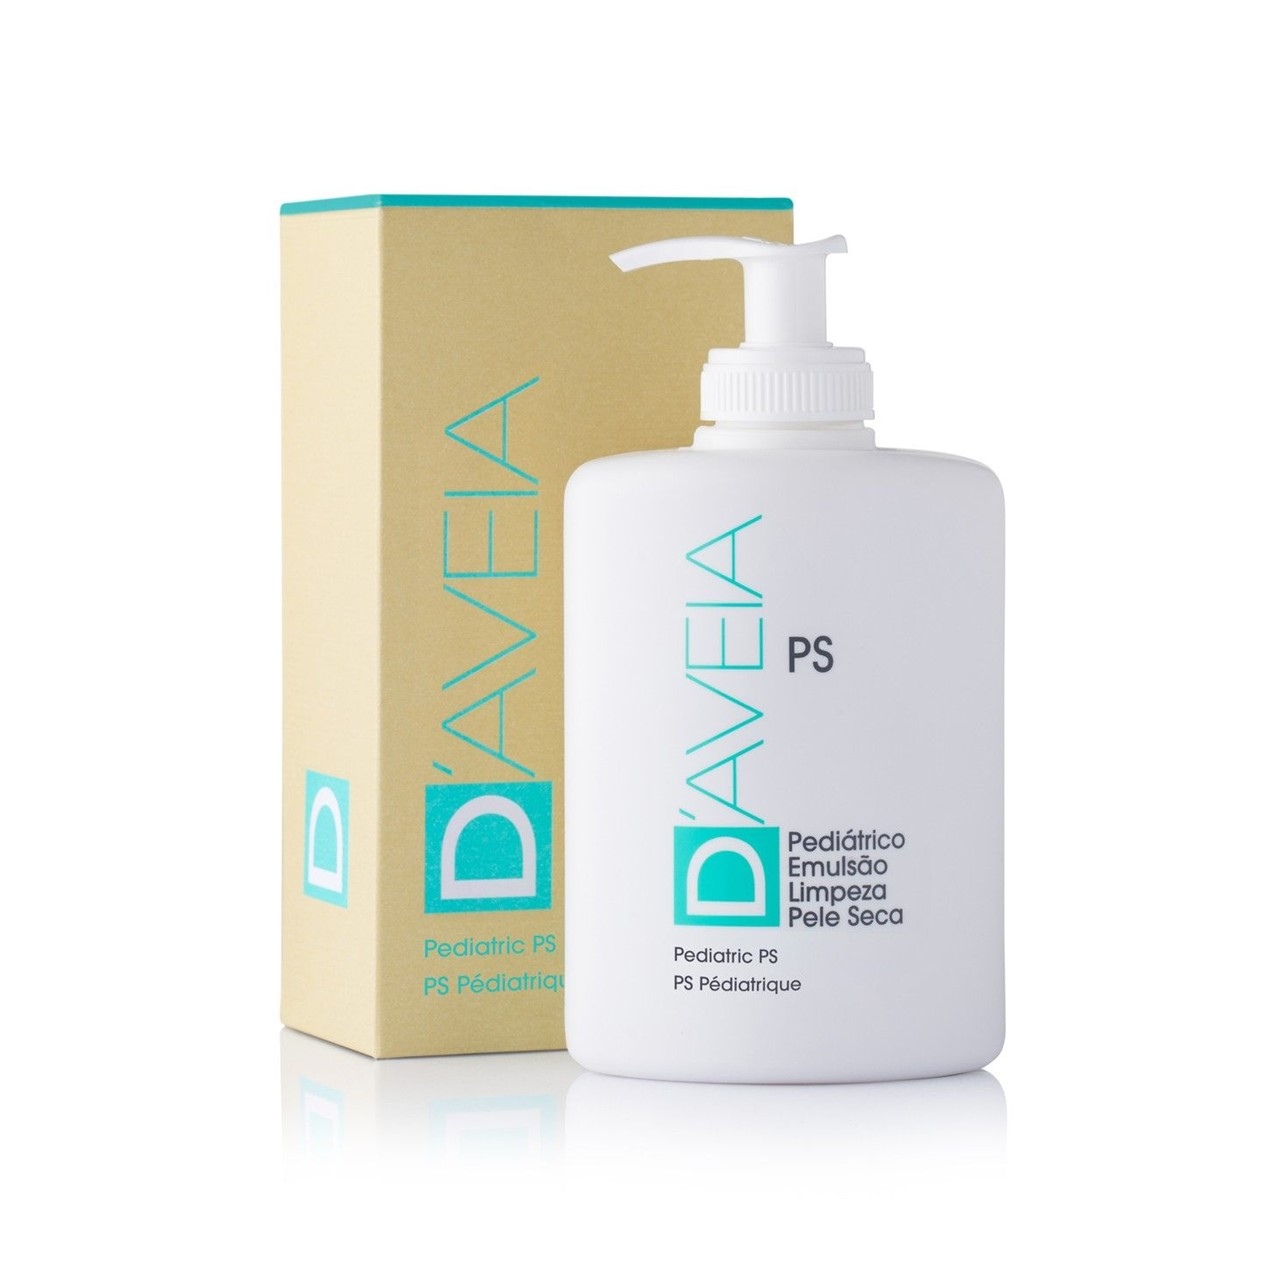 D'AVEIA Pediatric PS Dry Skin Cleansing Emulsion 300ml (10.14fl oz)